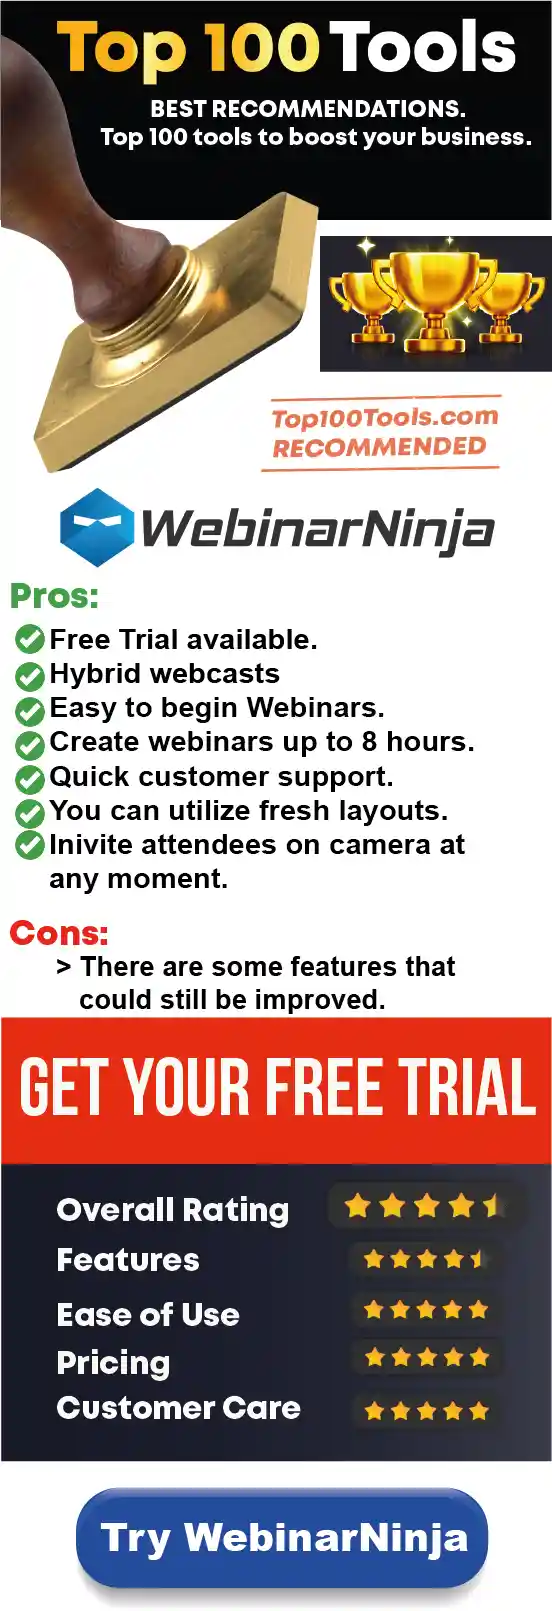 WebinarNinja free trial